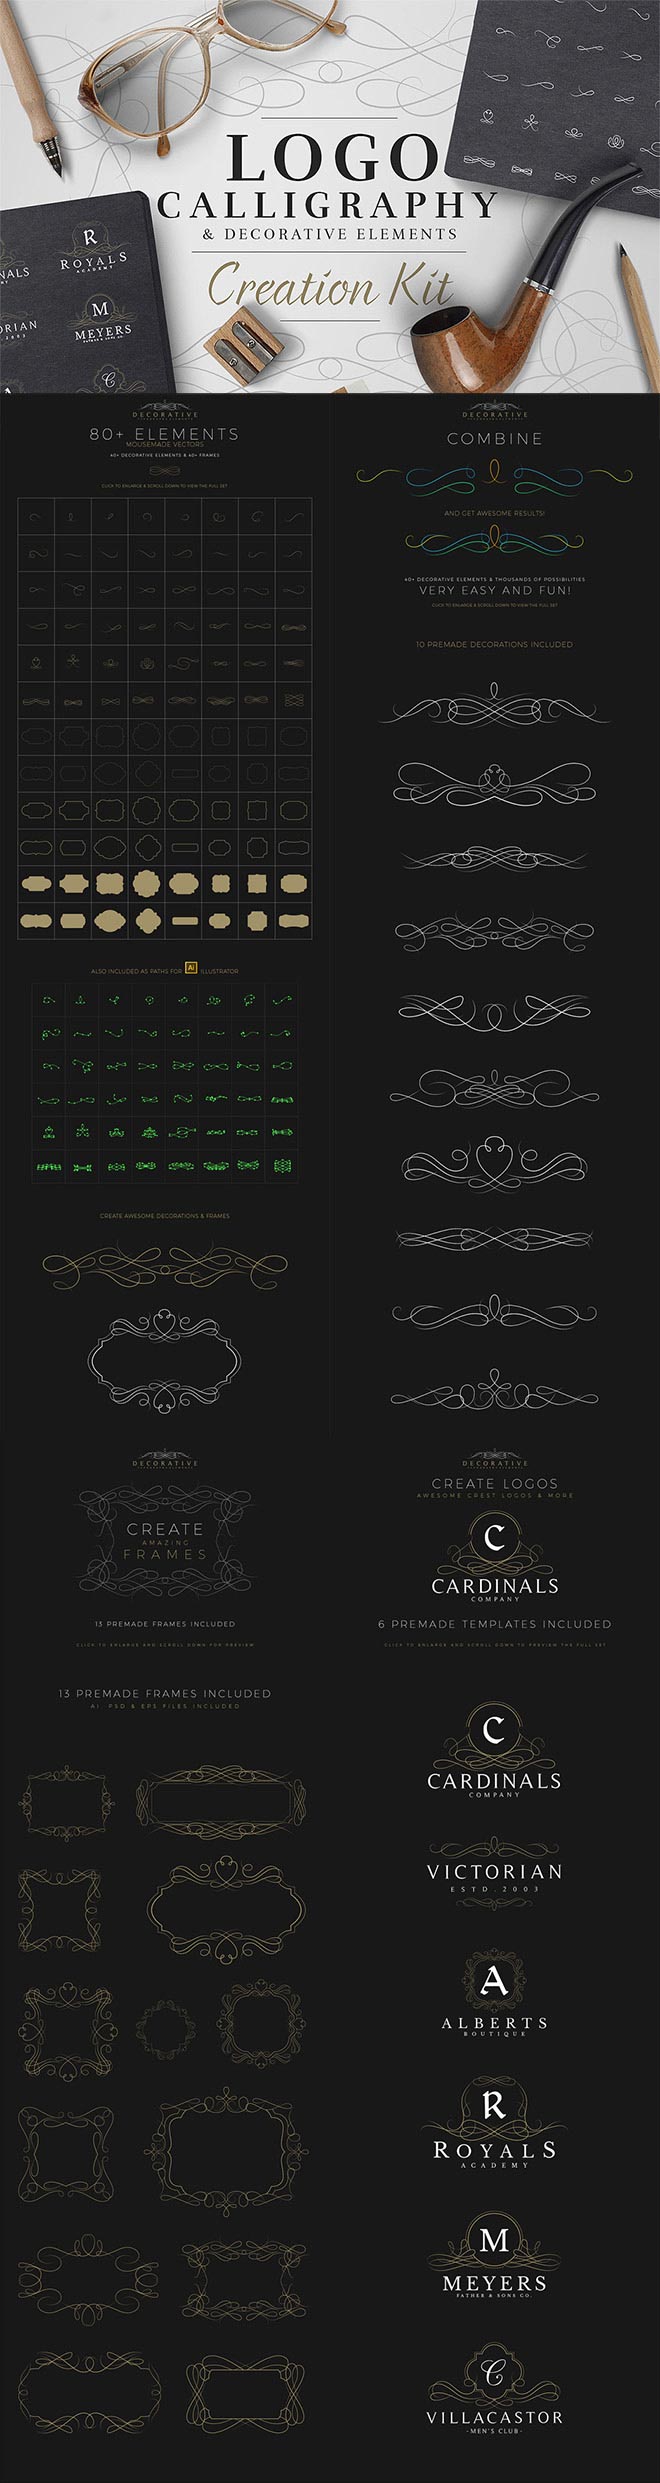 Calligraphy & Logo Creation Kit